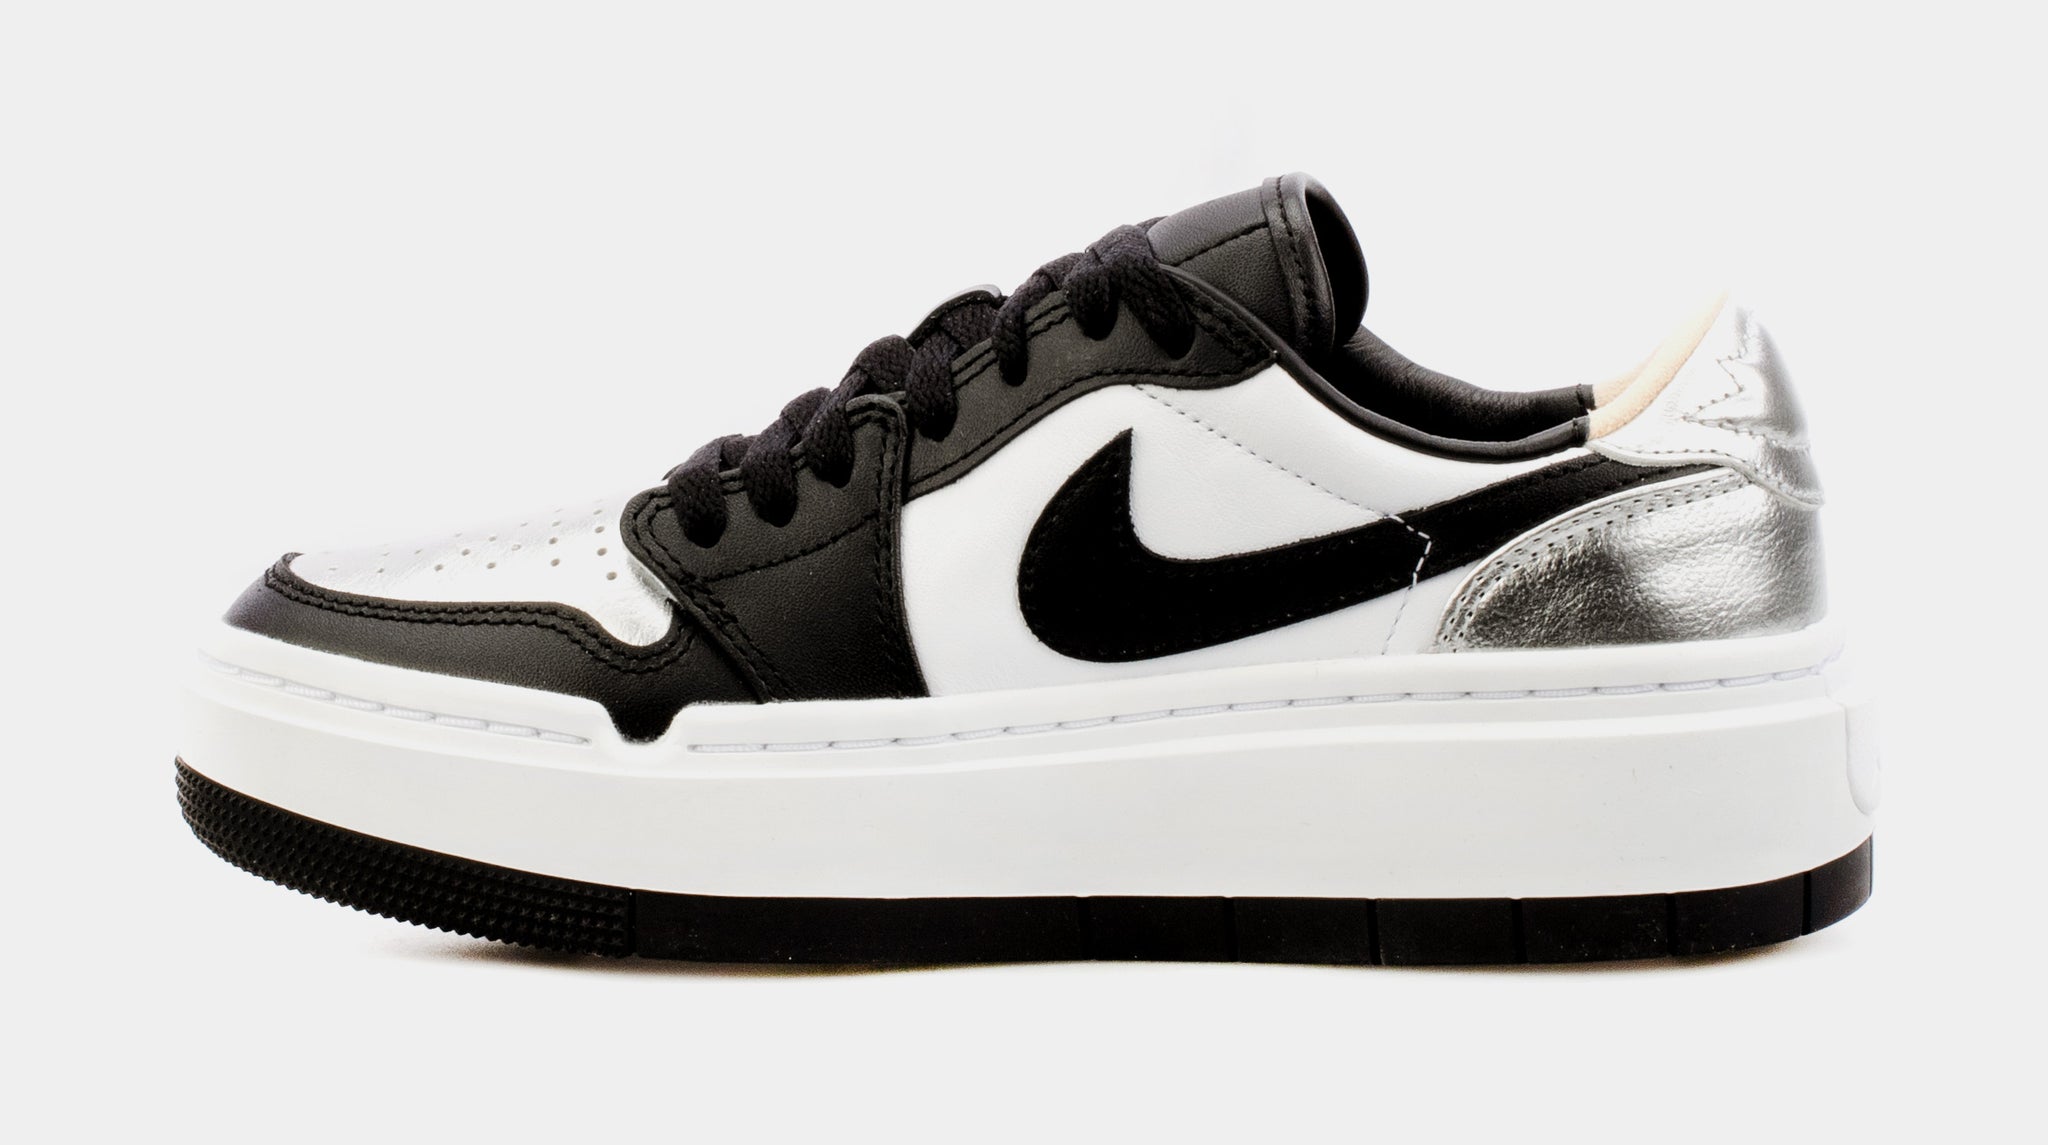 Nike Jordan 1 Air Elevate Low sneakers in gray and white - GRAY